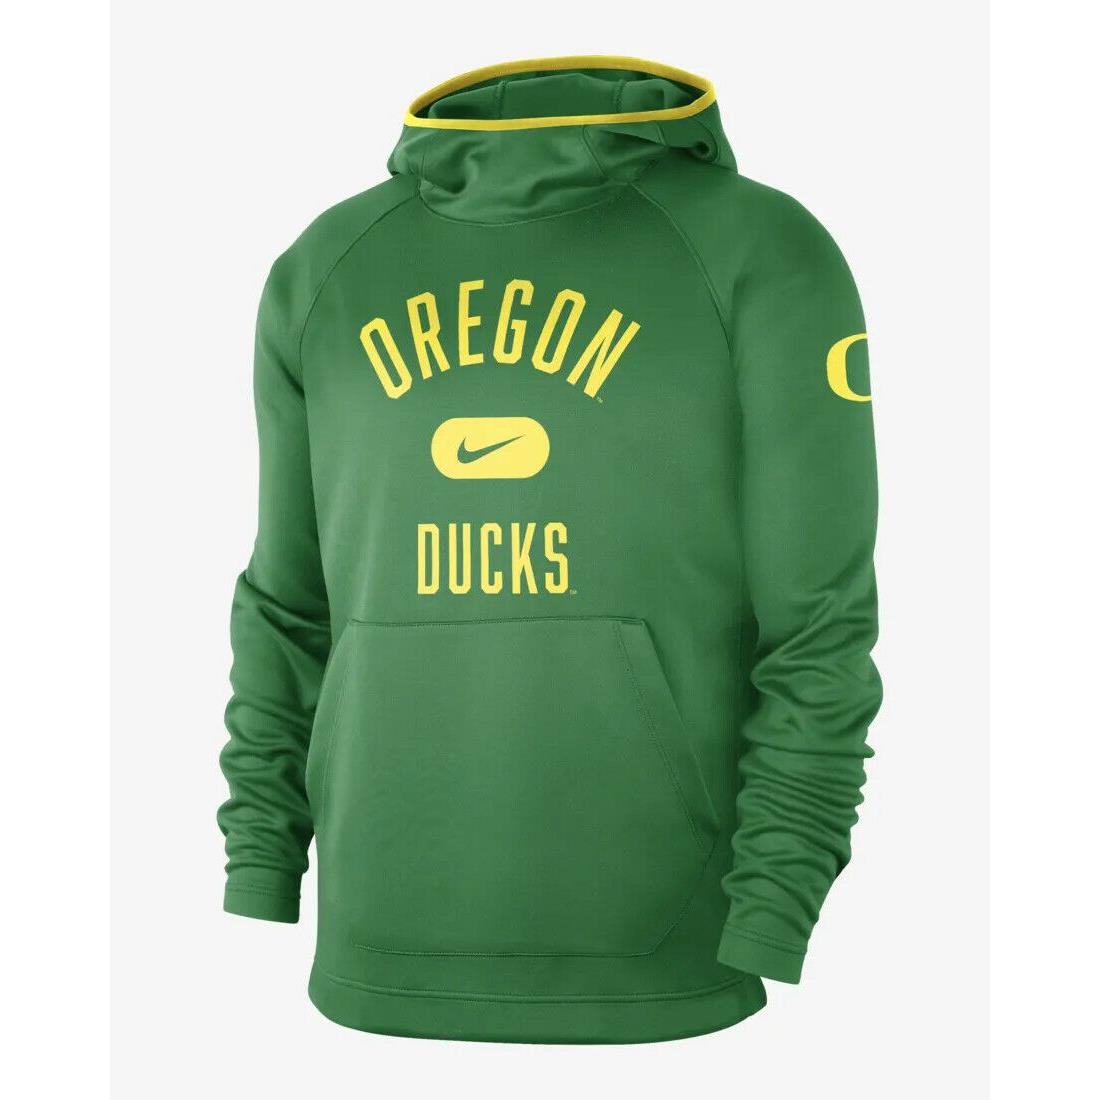 Mens Nike Dri-fit Oregon Ducks Green Hoodie Sweatshirt DD6259-377